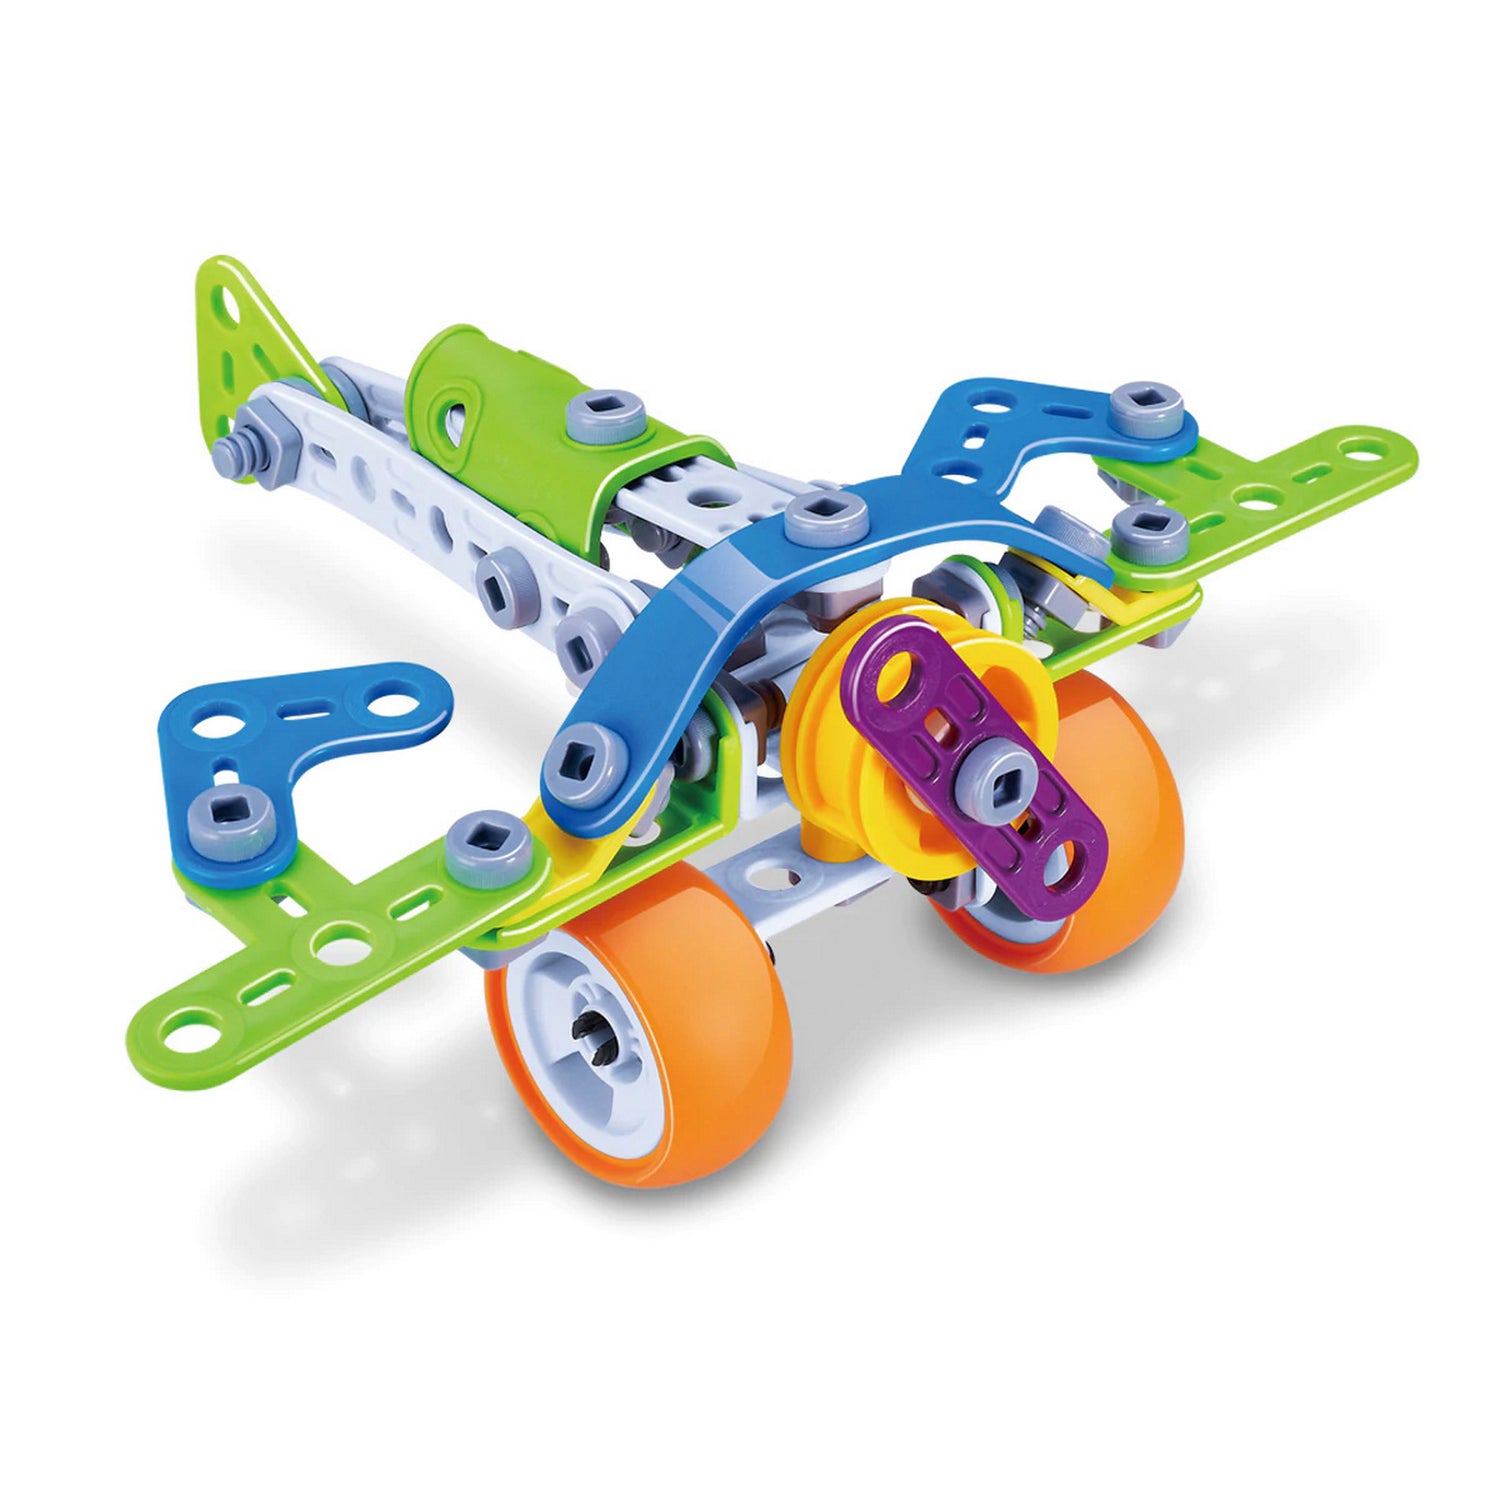 Flexibles Construct-IT Aeroplane Set